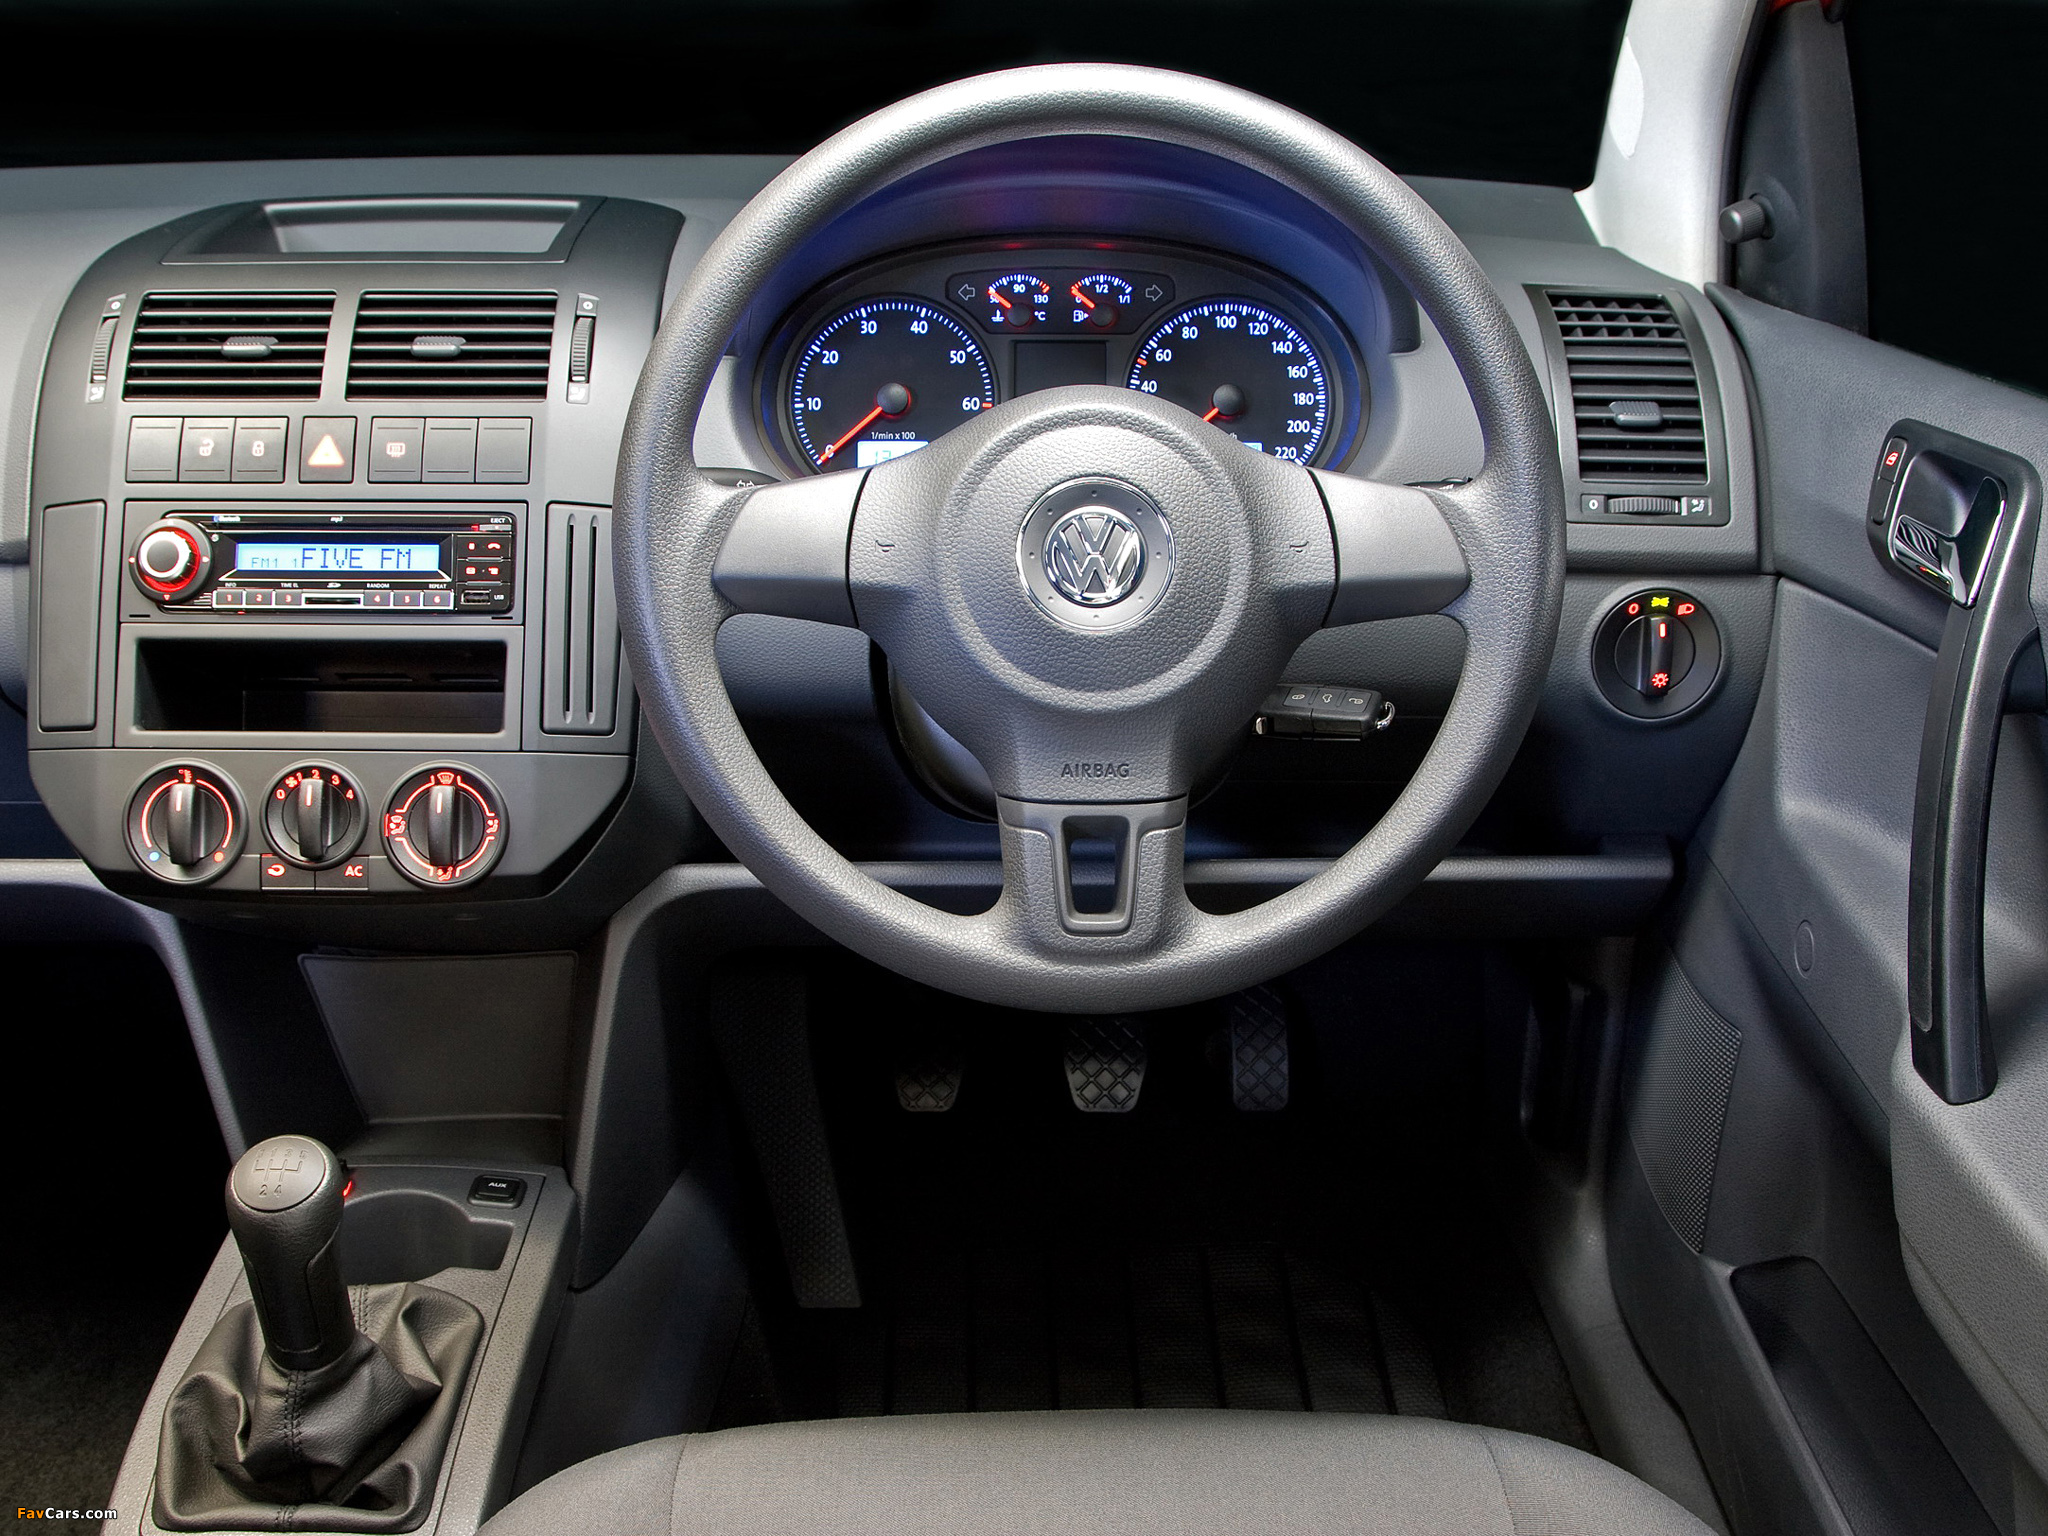 Volkswagen Polo Vivo Hatchback (IVf) 2010 photos (2048 x 1536)